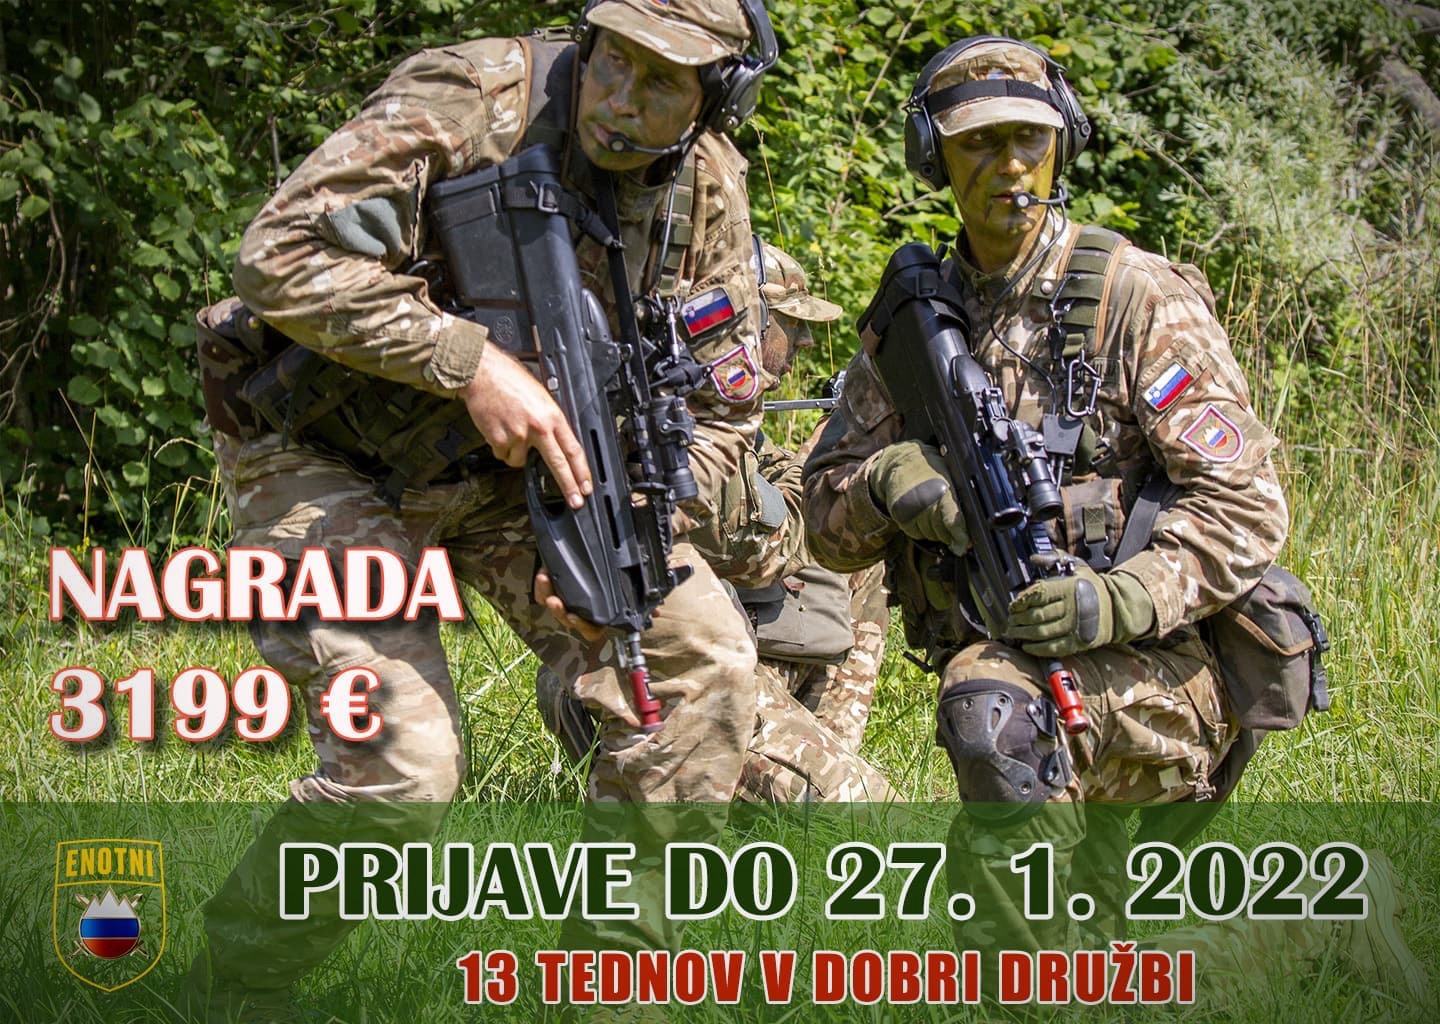 Reklamni plakat za dobrovoljno služenje vojnog roka u Sloveniji (foto: slovenskavojska.si)